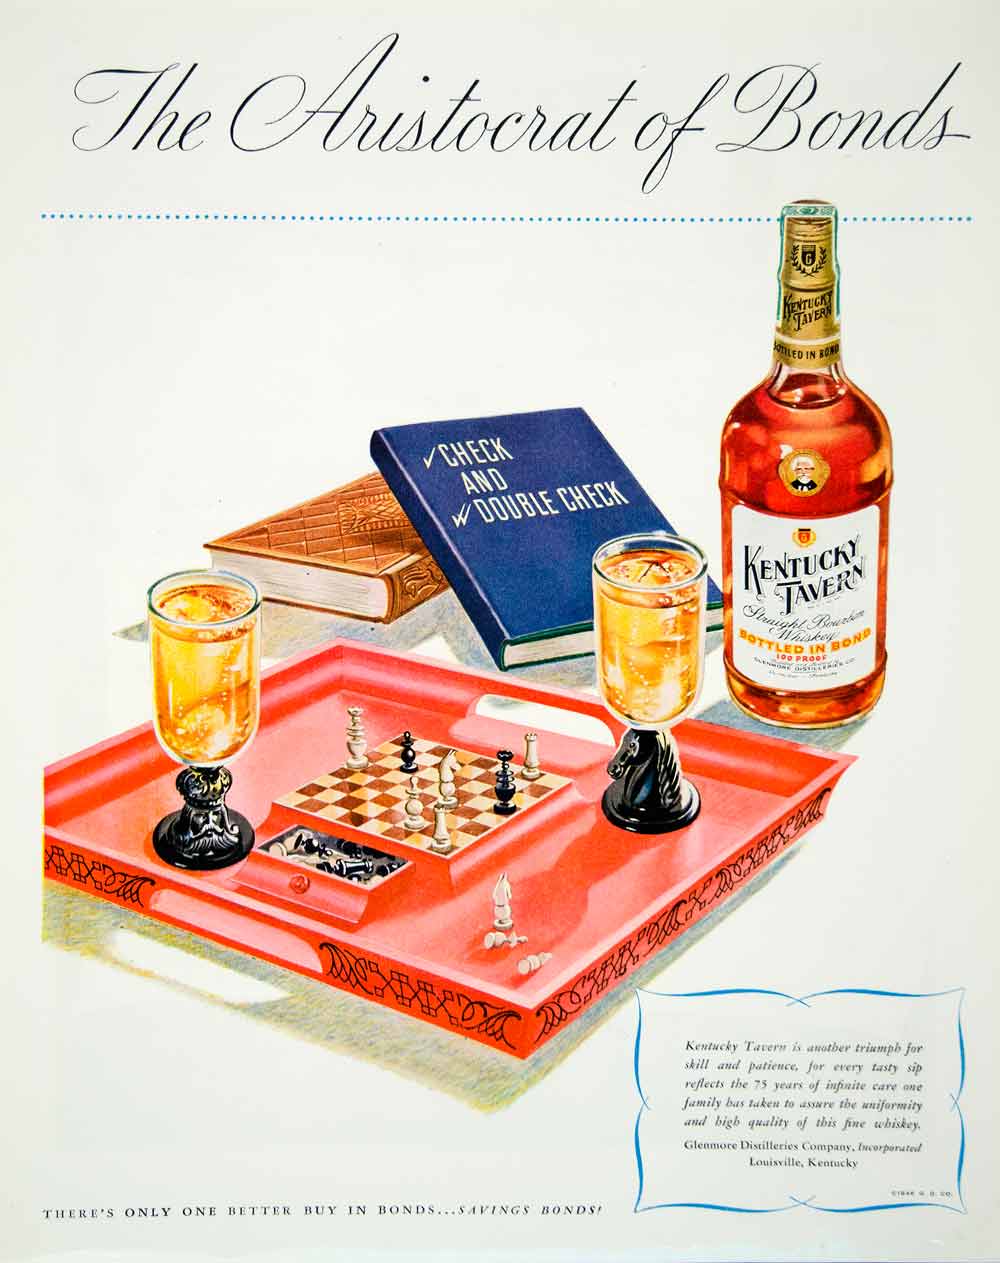 1946 Ad Kentucky Tavern Straight Bourbon Whiskey Chess Game Bonds Alcohol FTM1